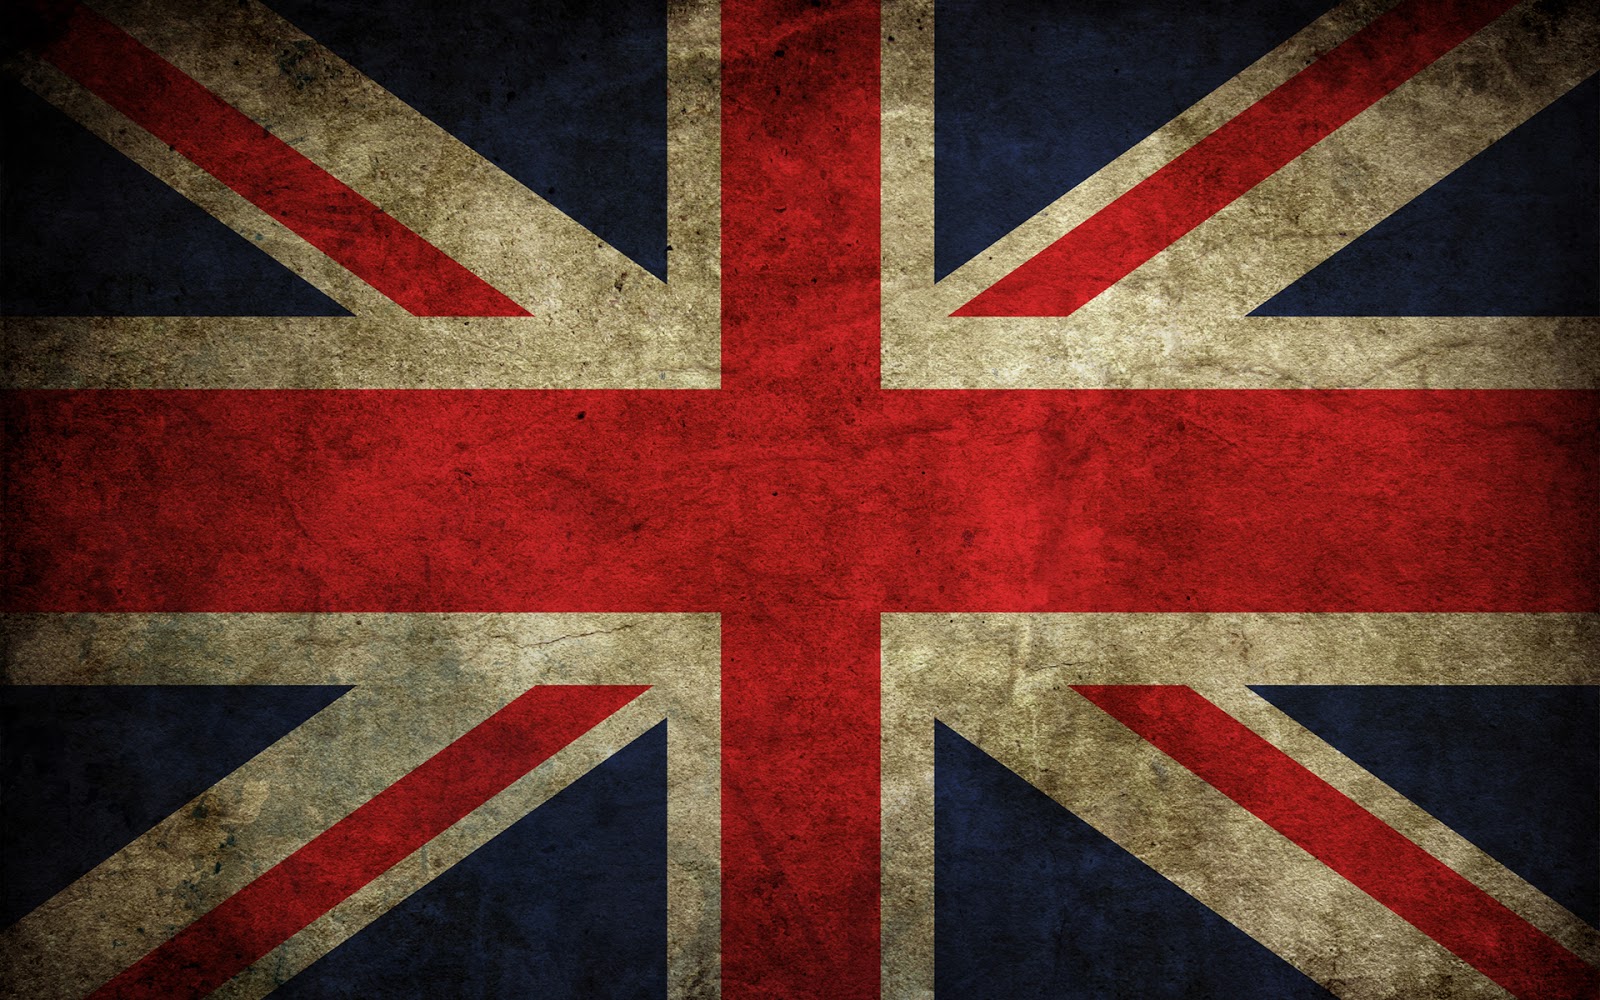 https://blogger.googleusercontent.com/img/b/R29vZ2xl/AVvXsEi3j1DhPGO2srvmfZLUFKS8z66OxcVf_pIpr3b9CfkRlk7tnLBtnRD4fVUuvd2qLnsd8RbBxDcQtqflfd8v6P9EErBjl0DRmSc0QPtPD5pGDuSk5O2kHN7VFWguKVRQIOudHeoo3W07s8QN/s1600/British+Flag+Wallpapers.jpg